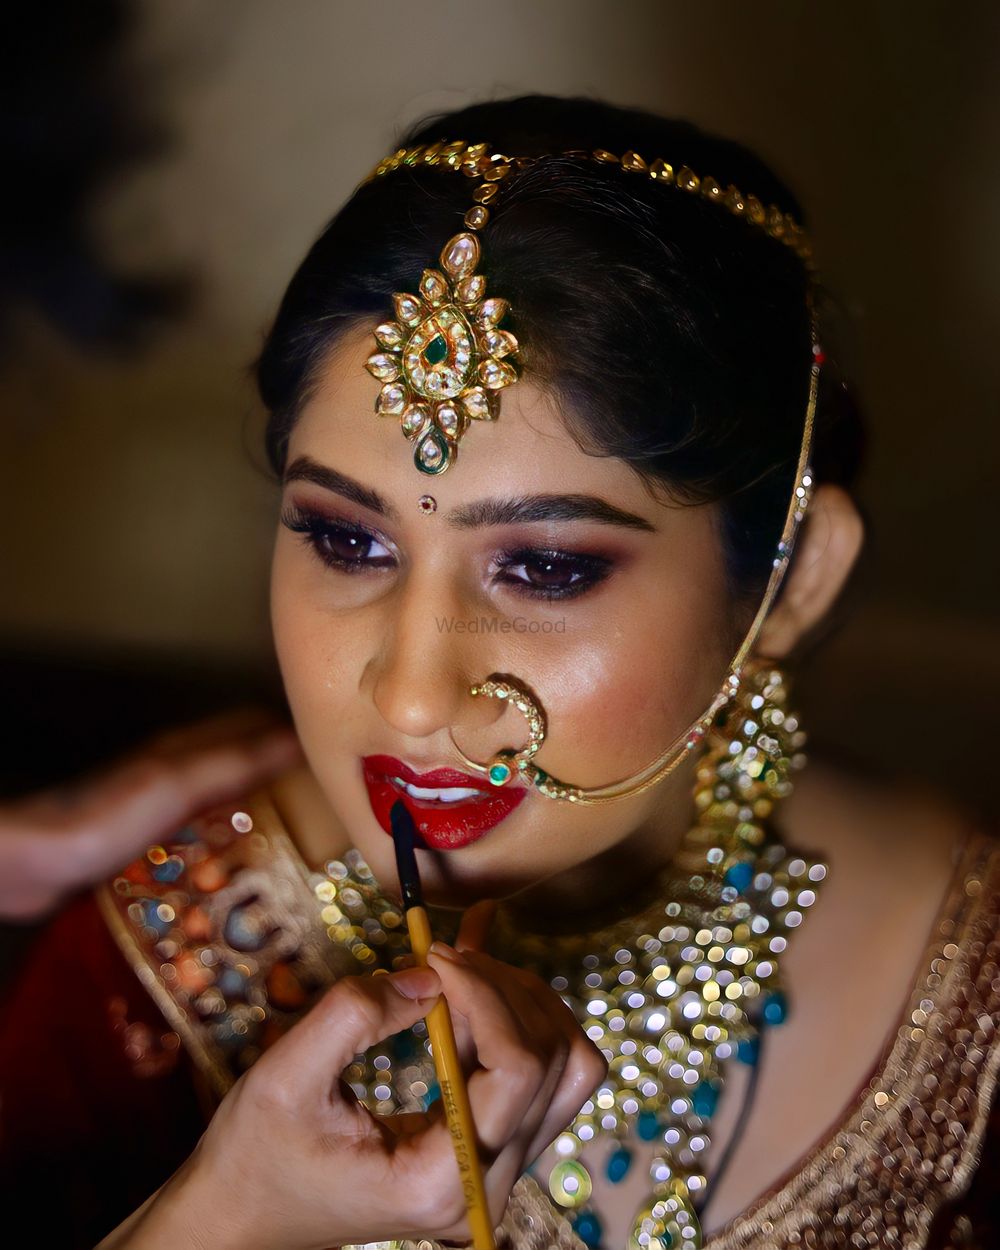 Photo From North Indian Bridal Makeup - By Makeup by Priyanka